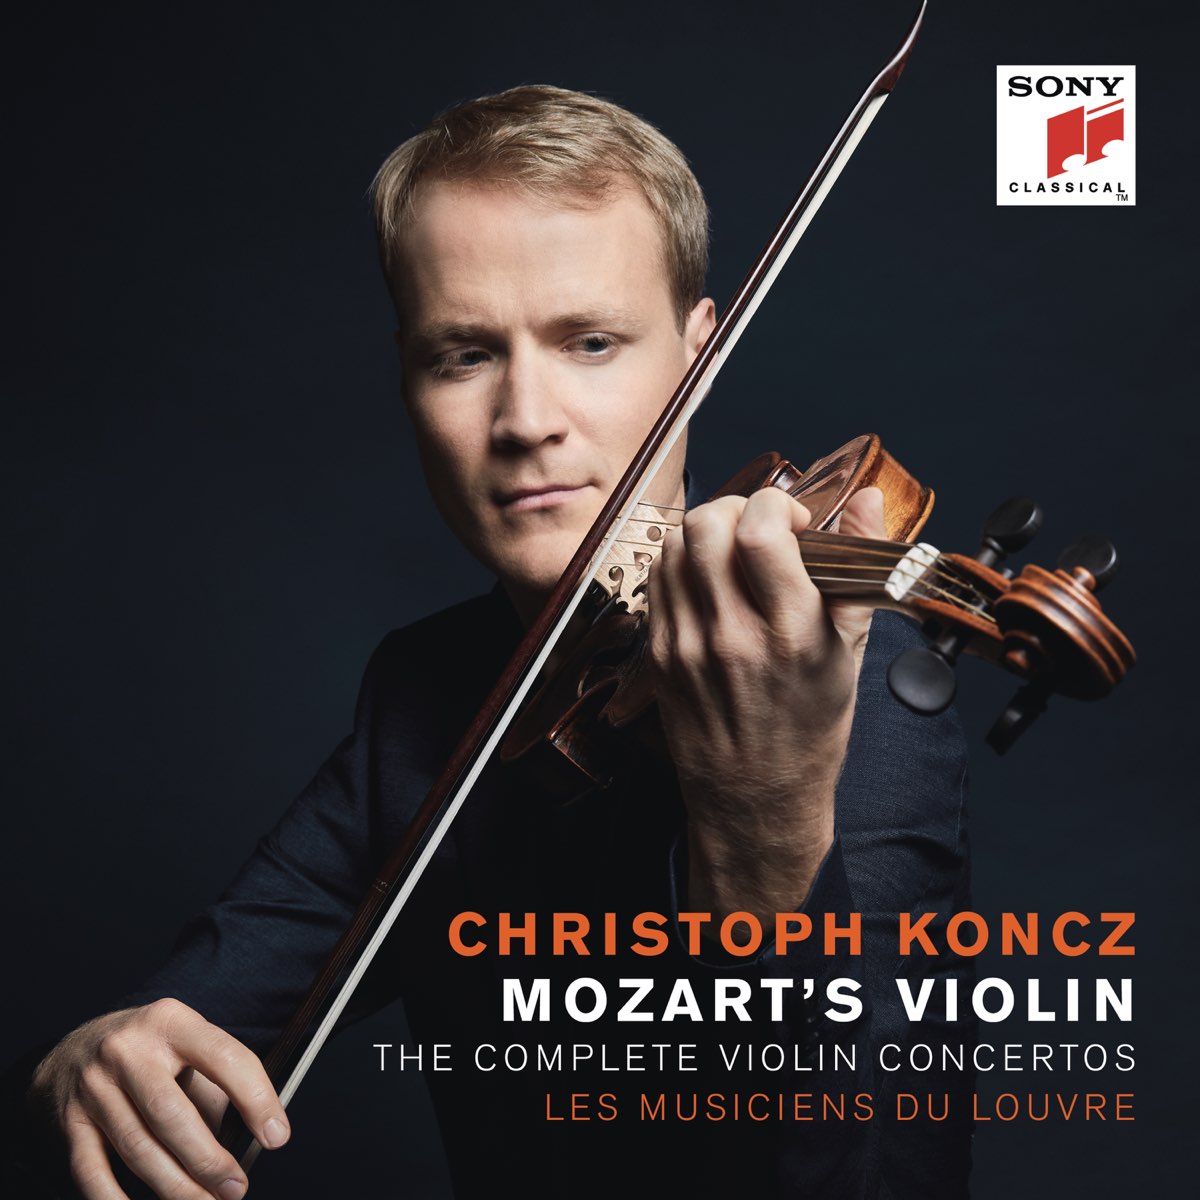 Mozart's Violin: The Complete Violin Concertos – Album par Christoph Koncz  – Apple Music